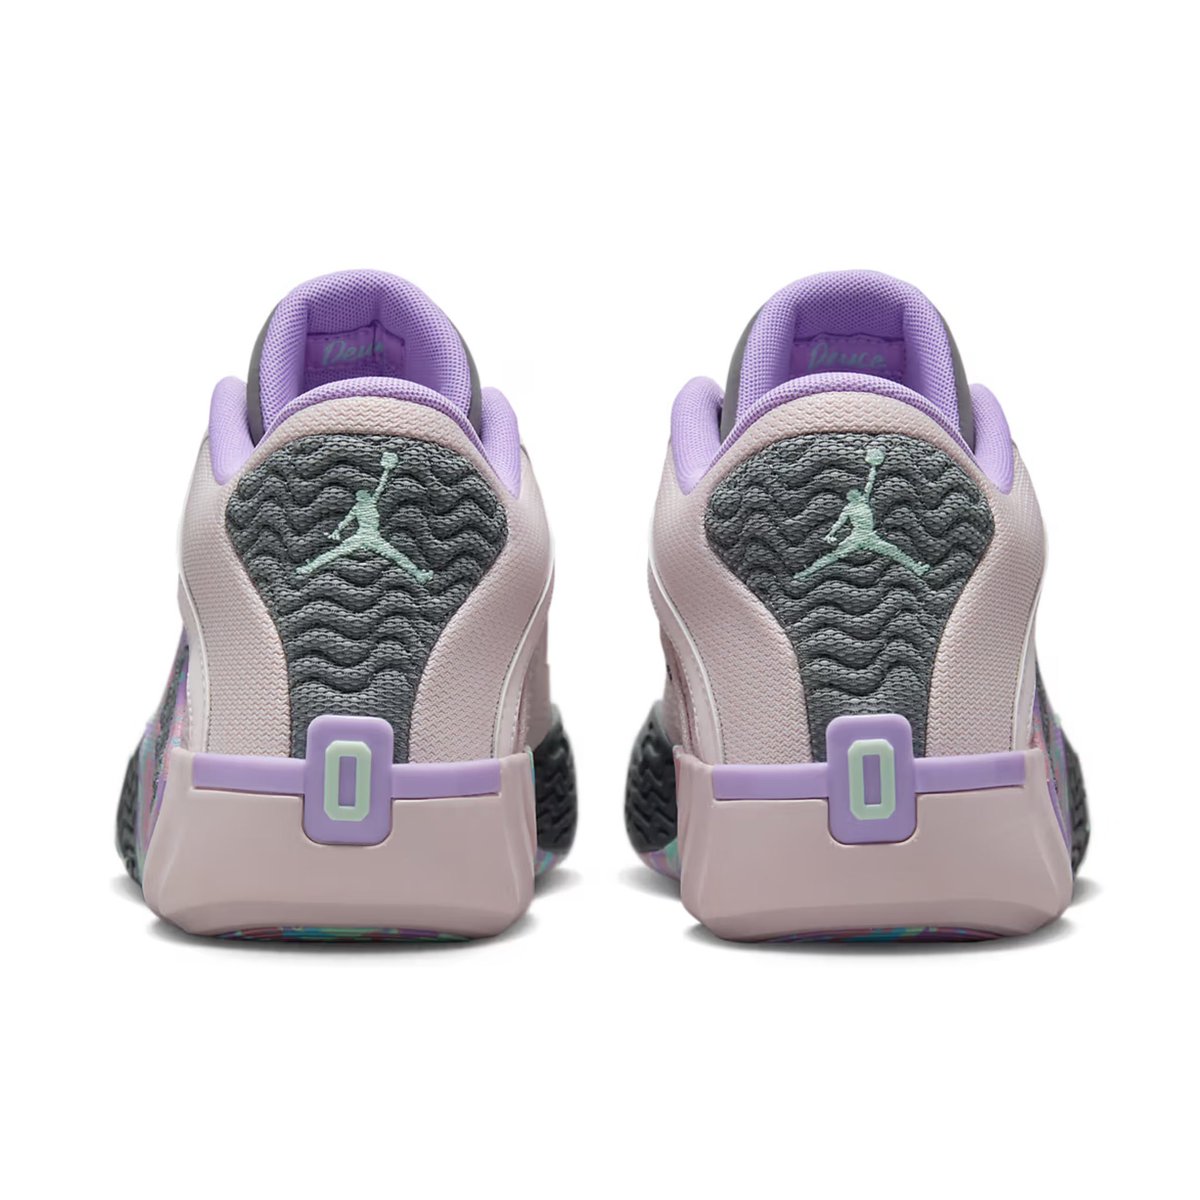 Jordan Tatum 2 'Easter'

Availability: May 9th, 2024
Retail Price: $125 USD
#JordanBrand #Nike #JaysonTatum #Shoes #Sneakers